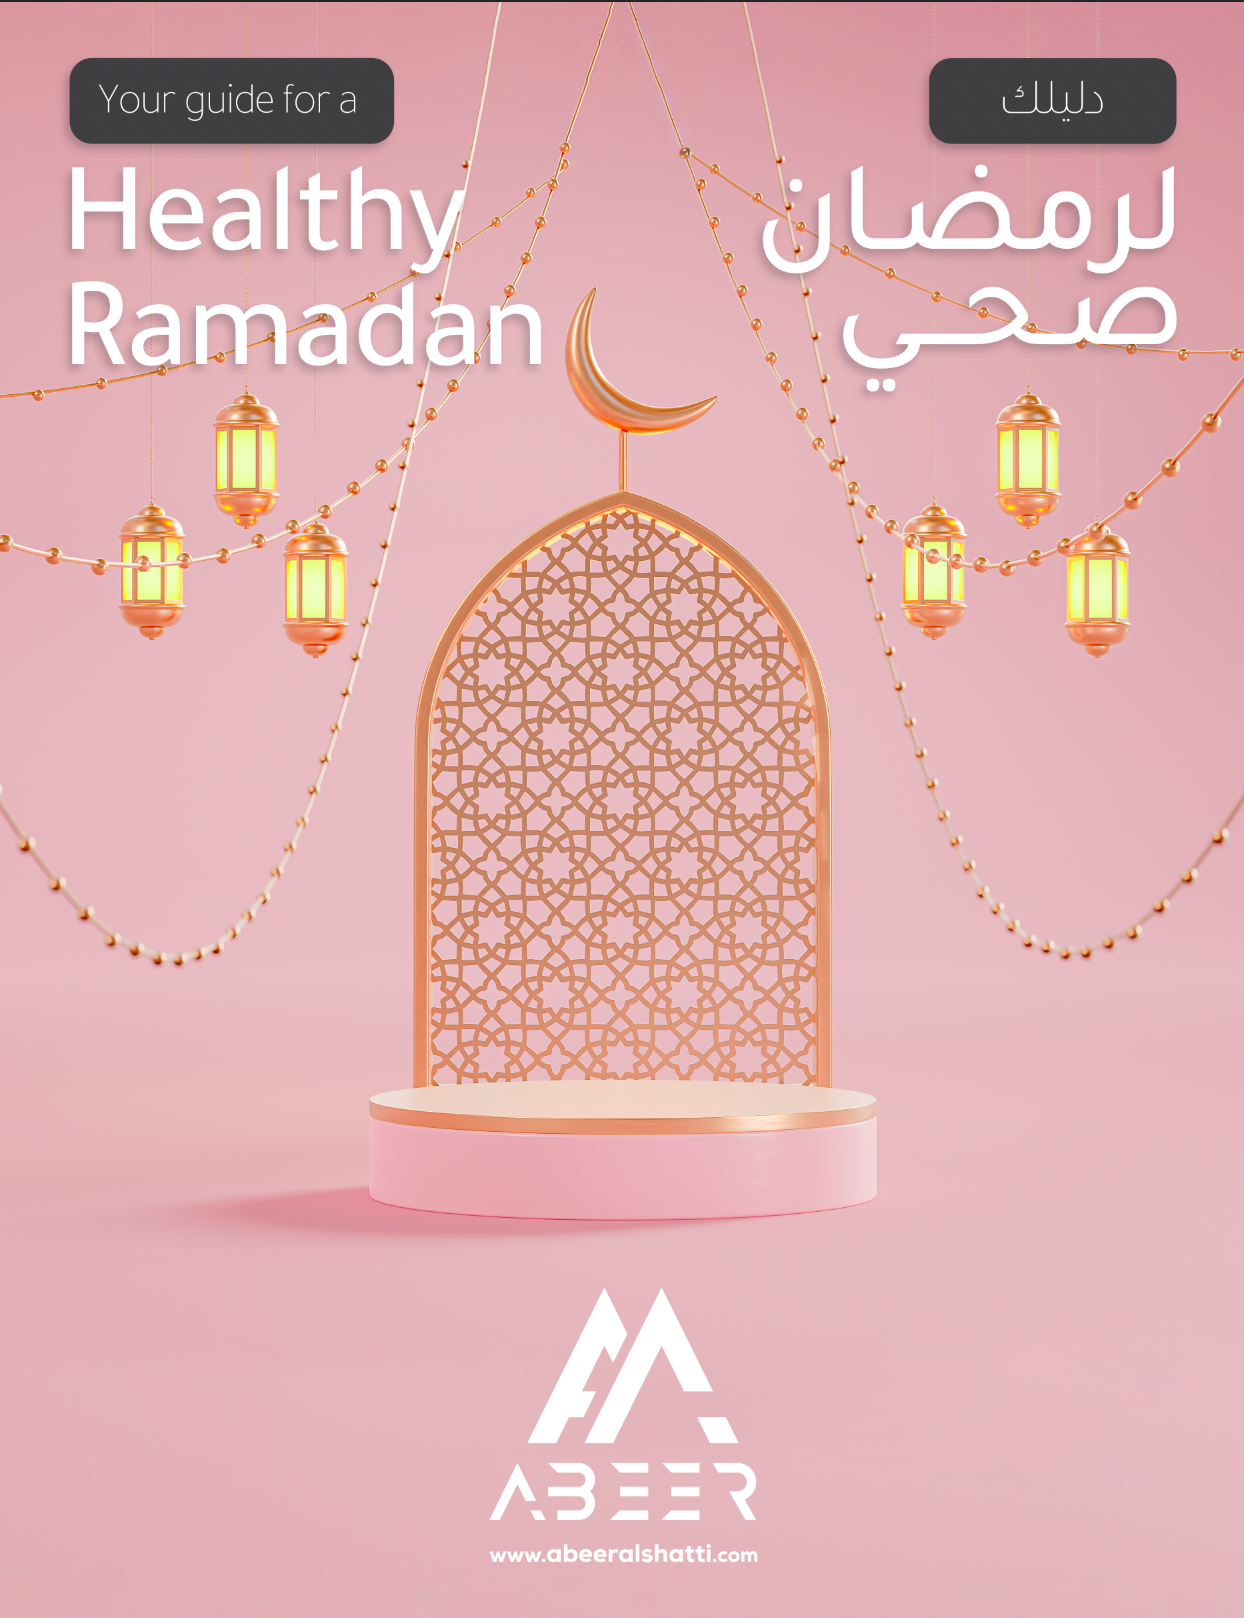 Healthy Ramadan Guide